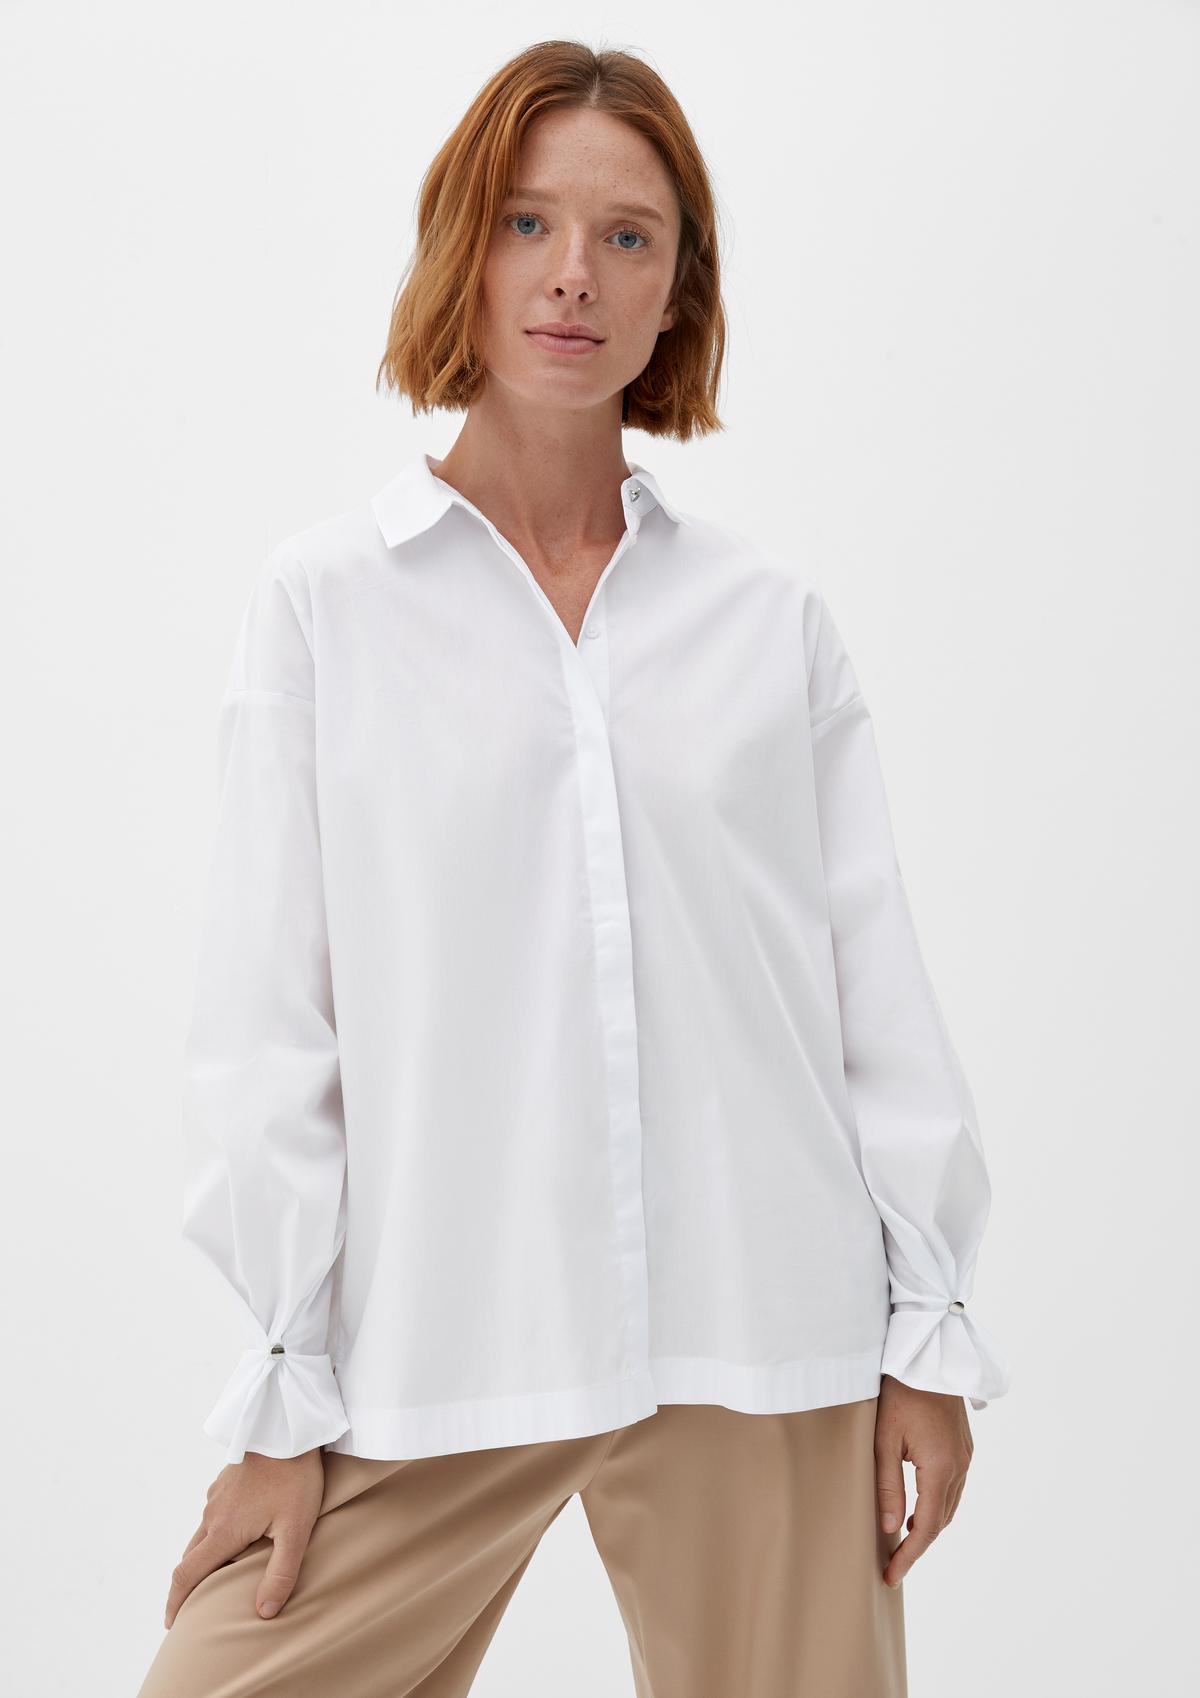 Shirts & Blouses - Olsen Fashion Canada